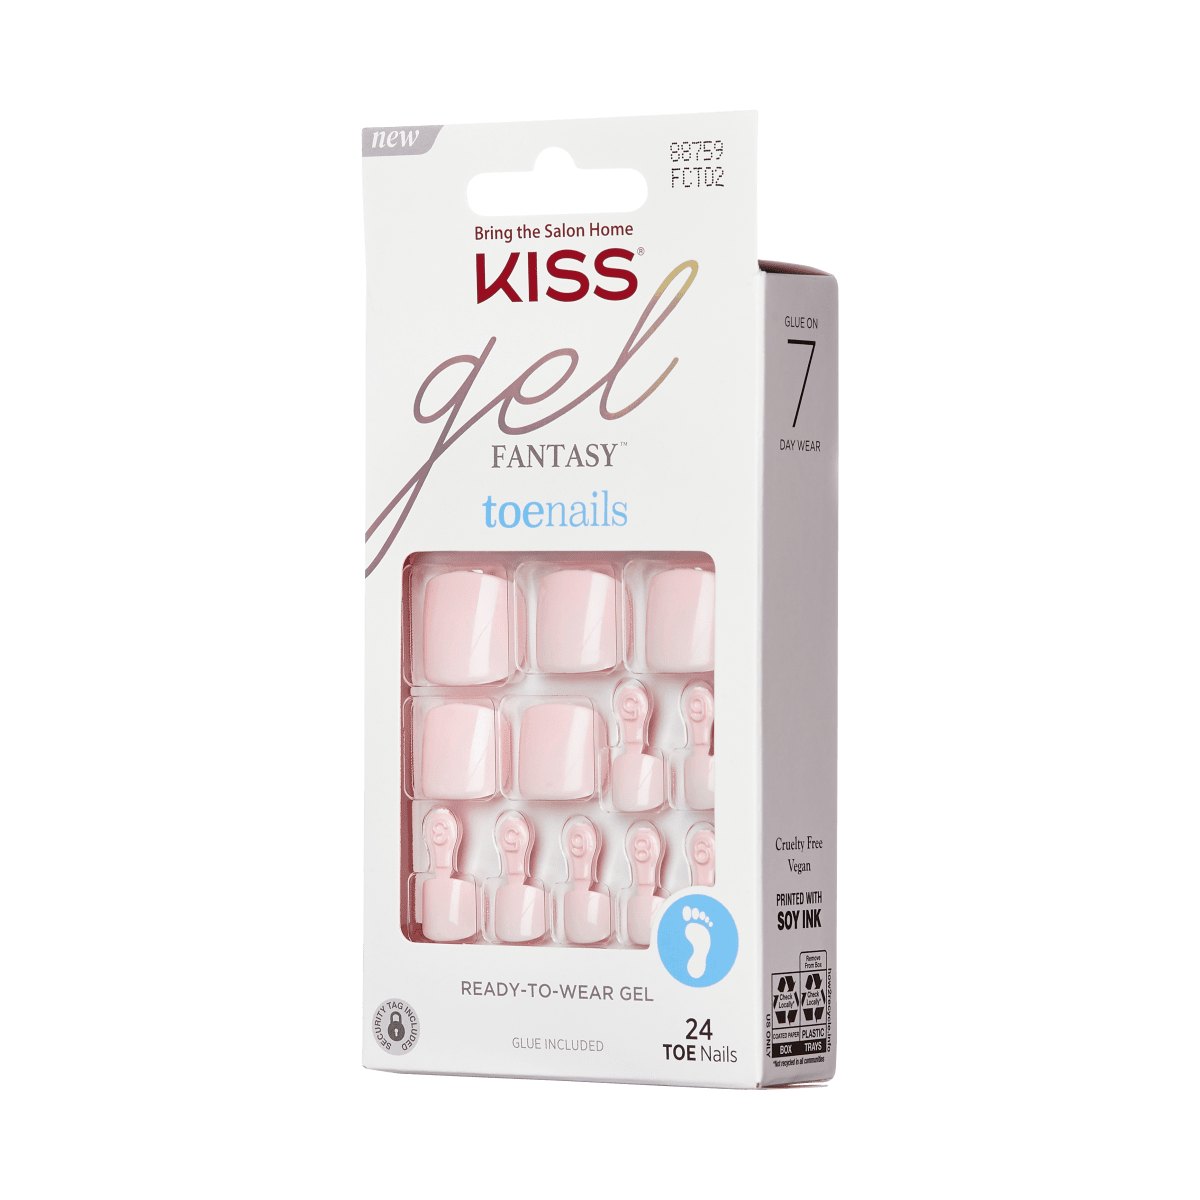 KISS Gel Fantasy Toenails - Try Everything